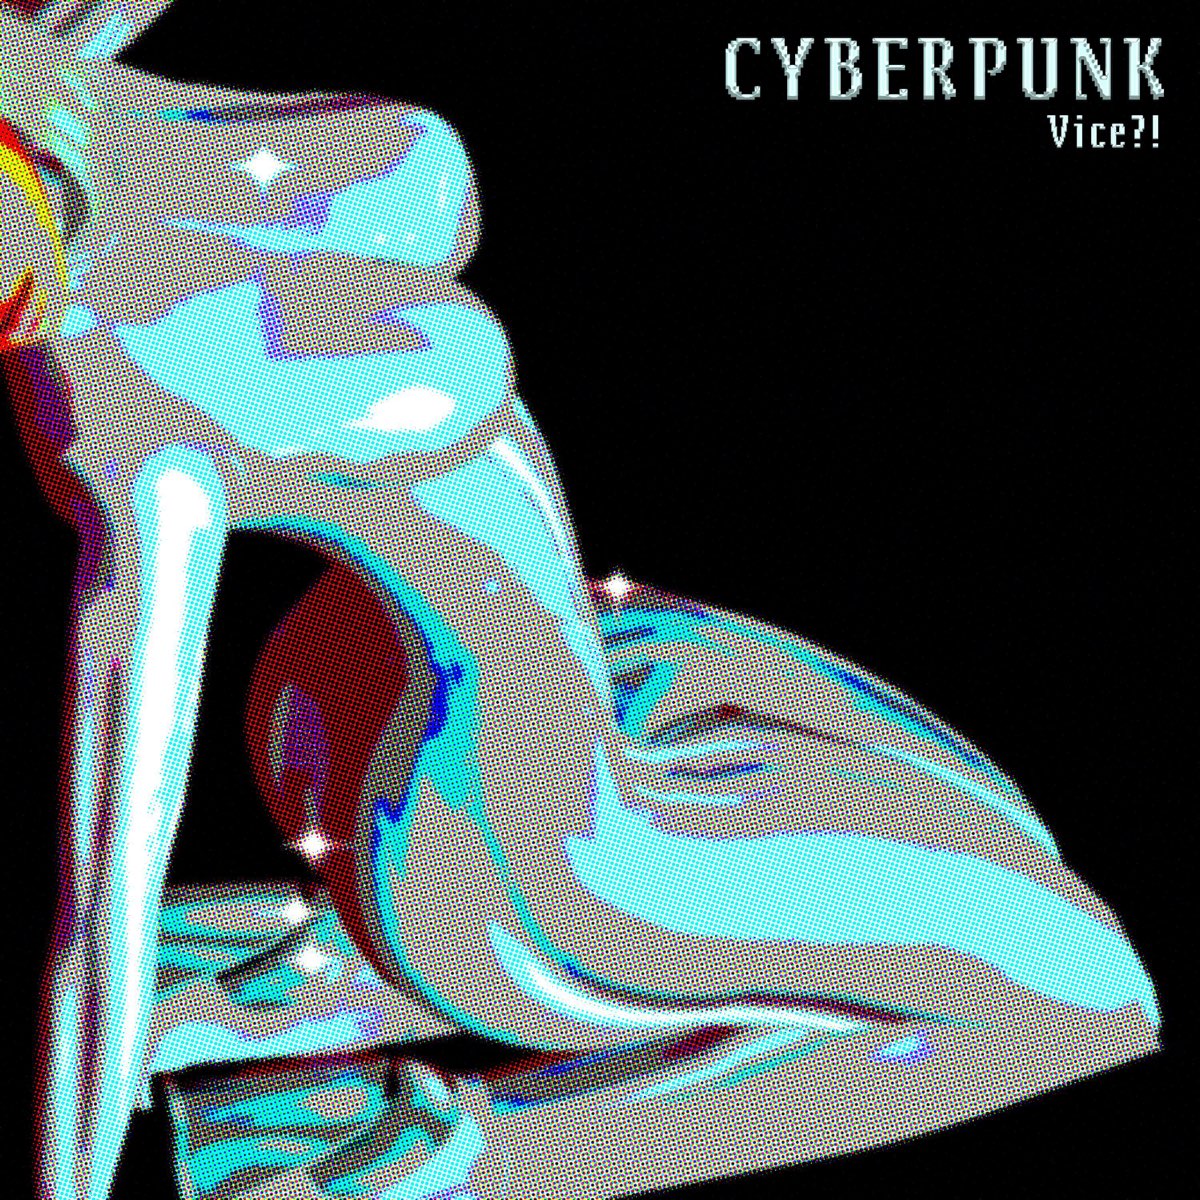 задание звуки музыки cyberpunk фото 8